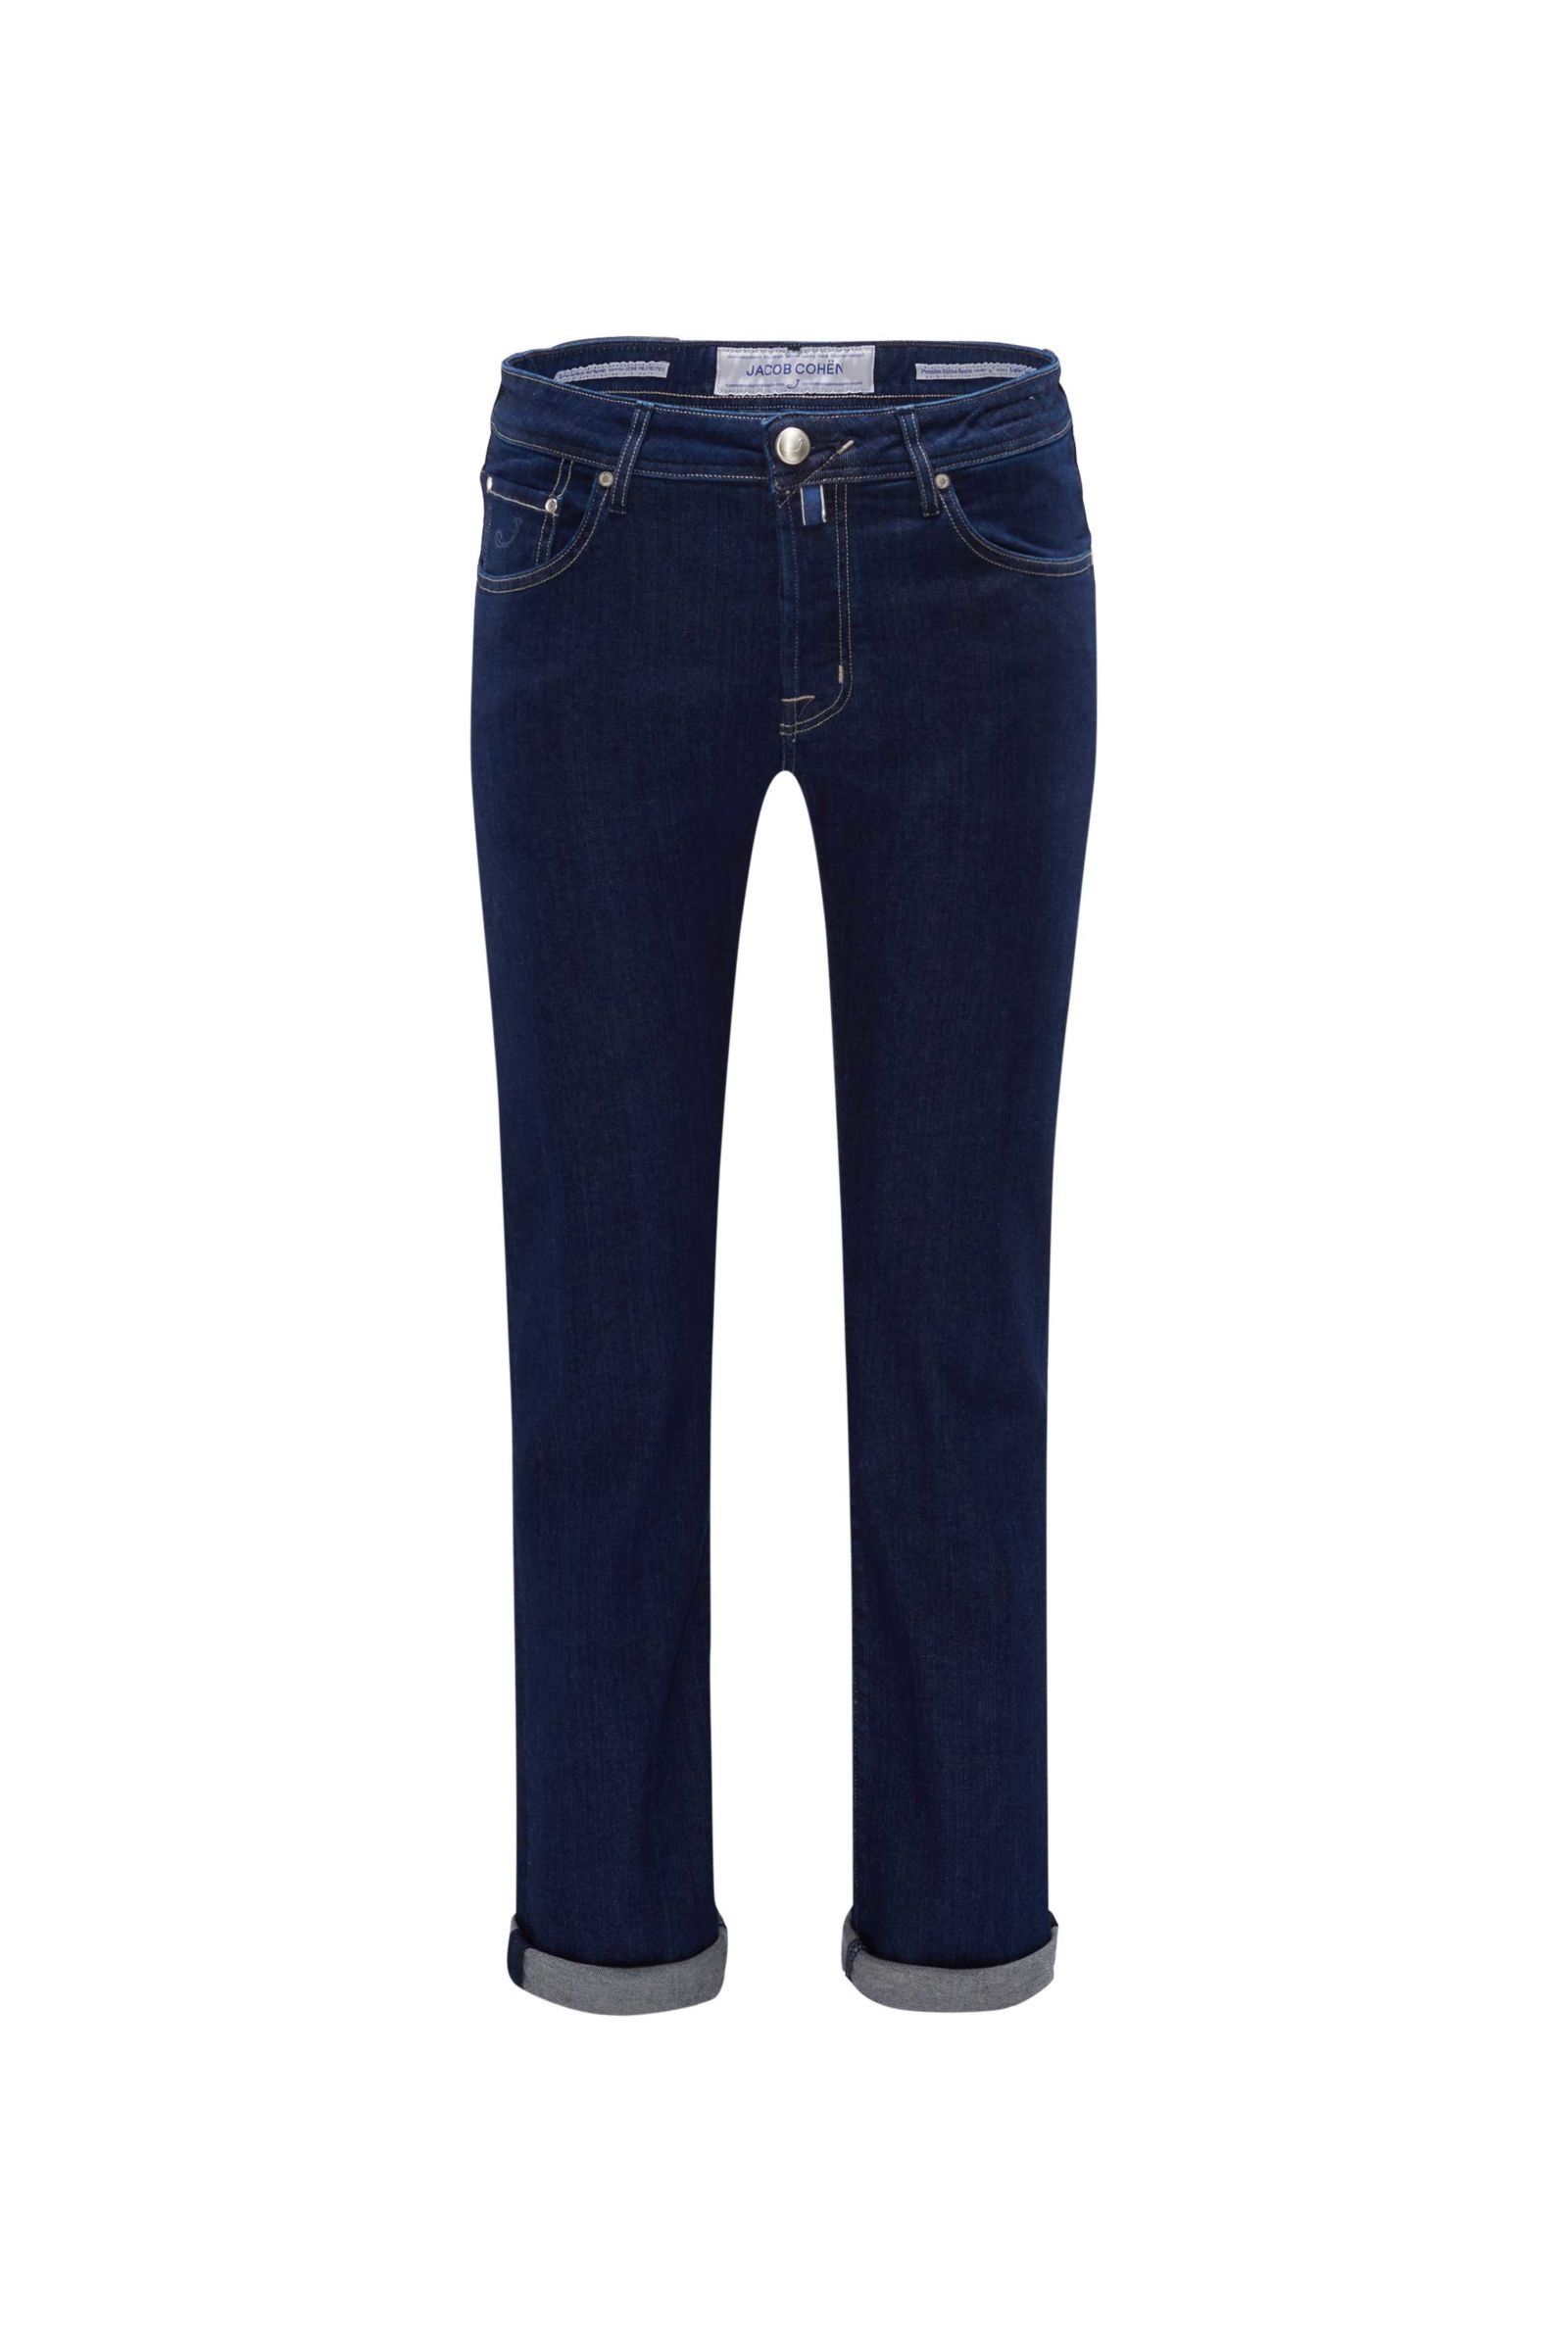 Jeans 'J620 Comfort Extra Slim Fit' navy